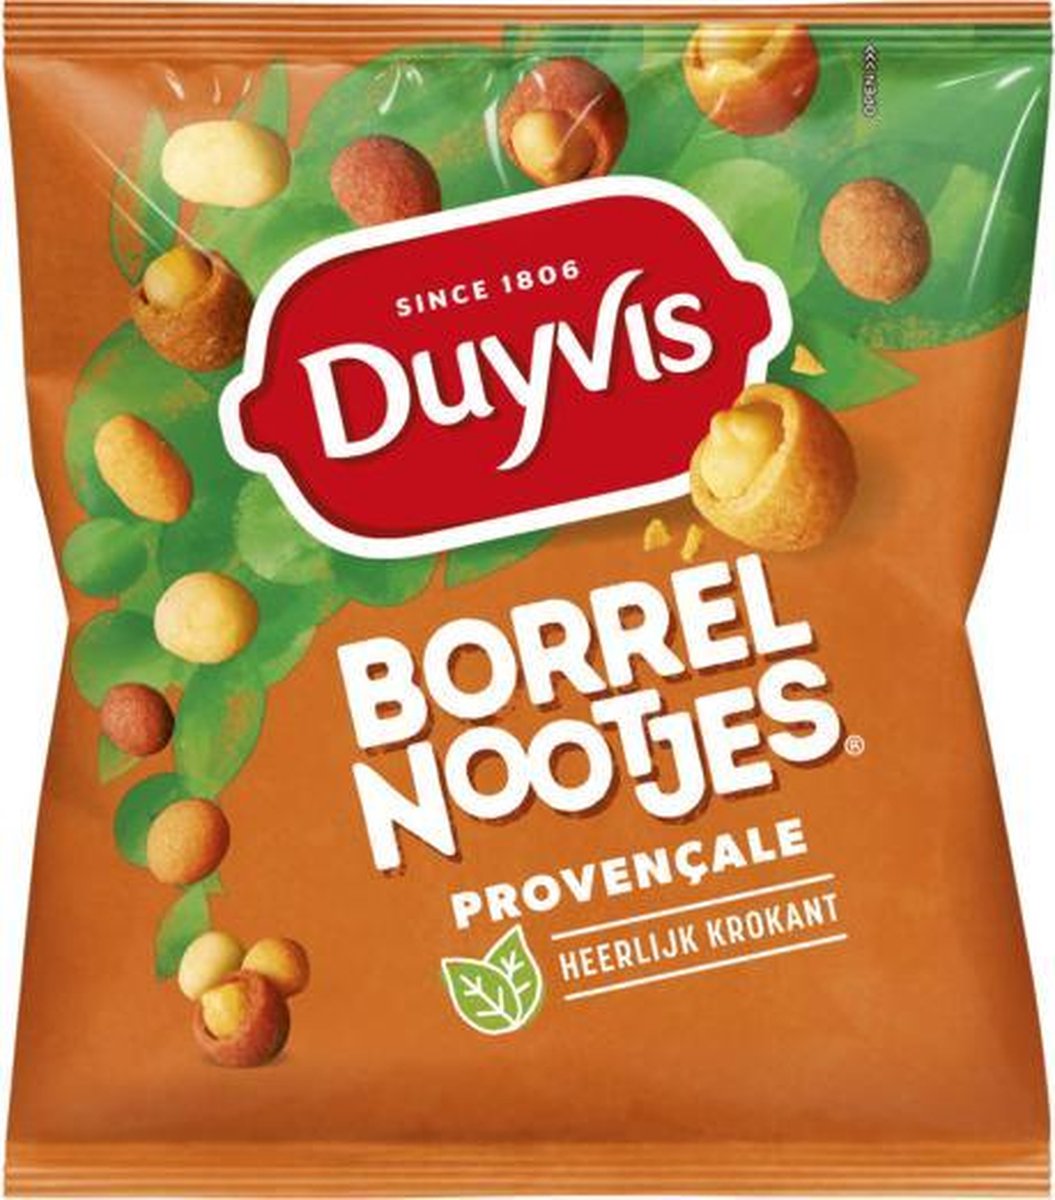 Duyvis - Borrelnootjes Provençale - 20x Minizakjes